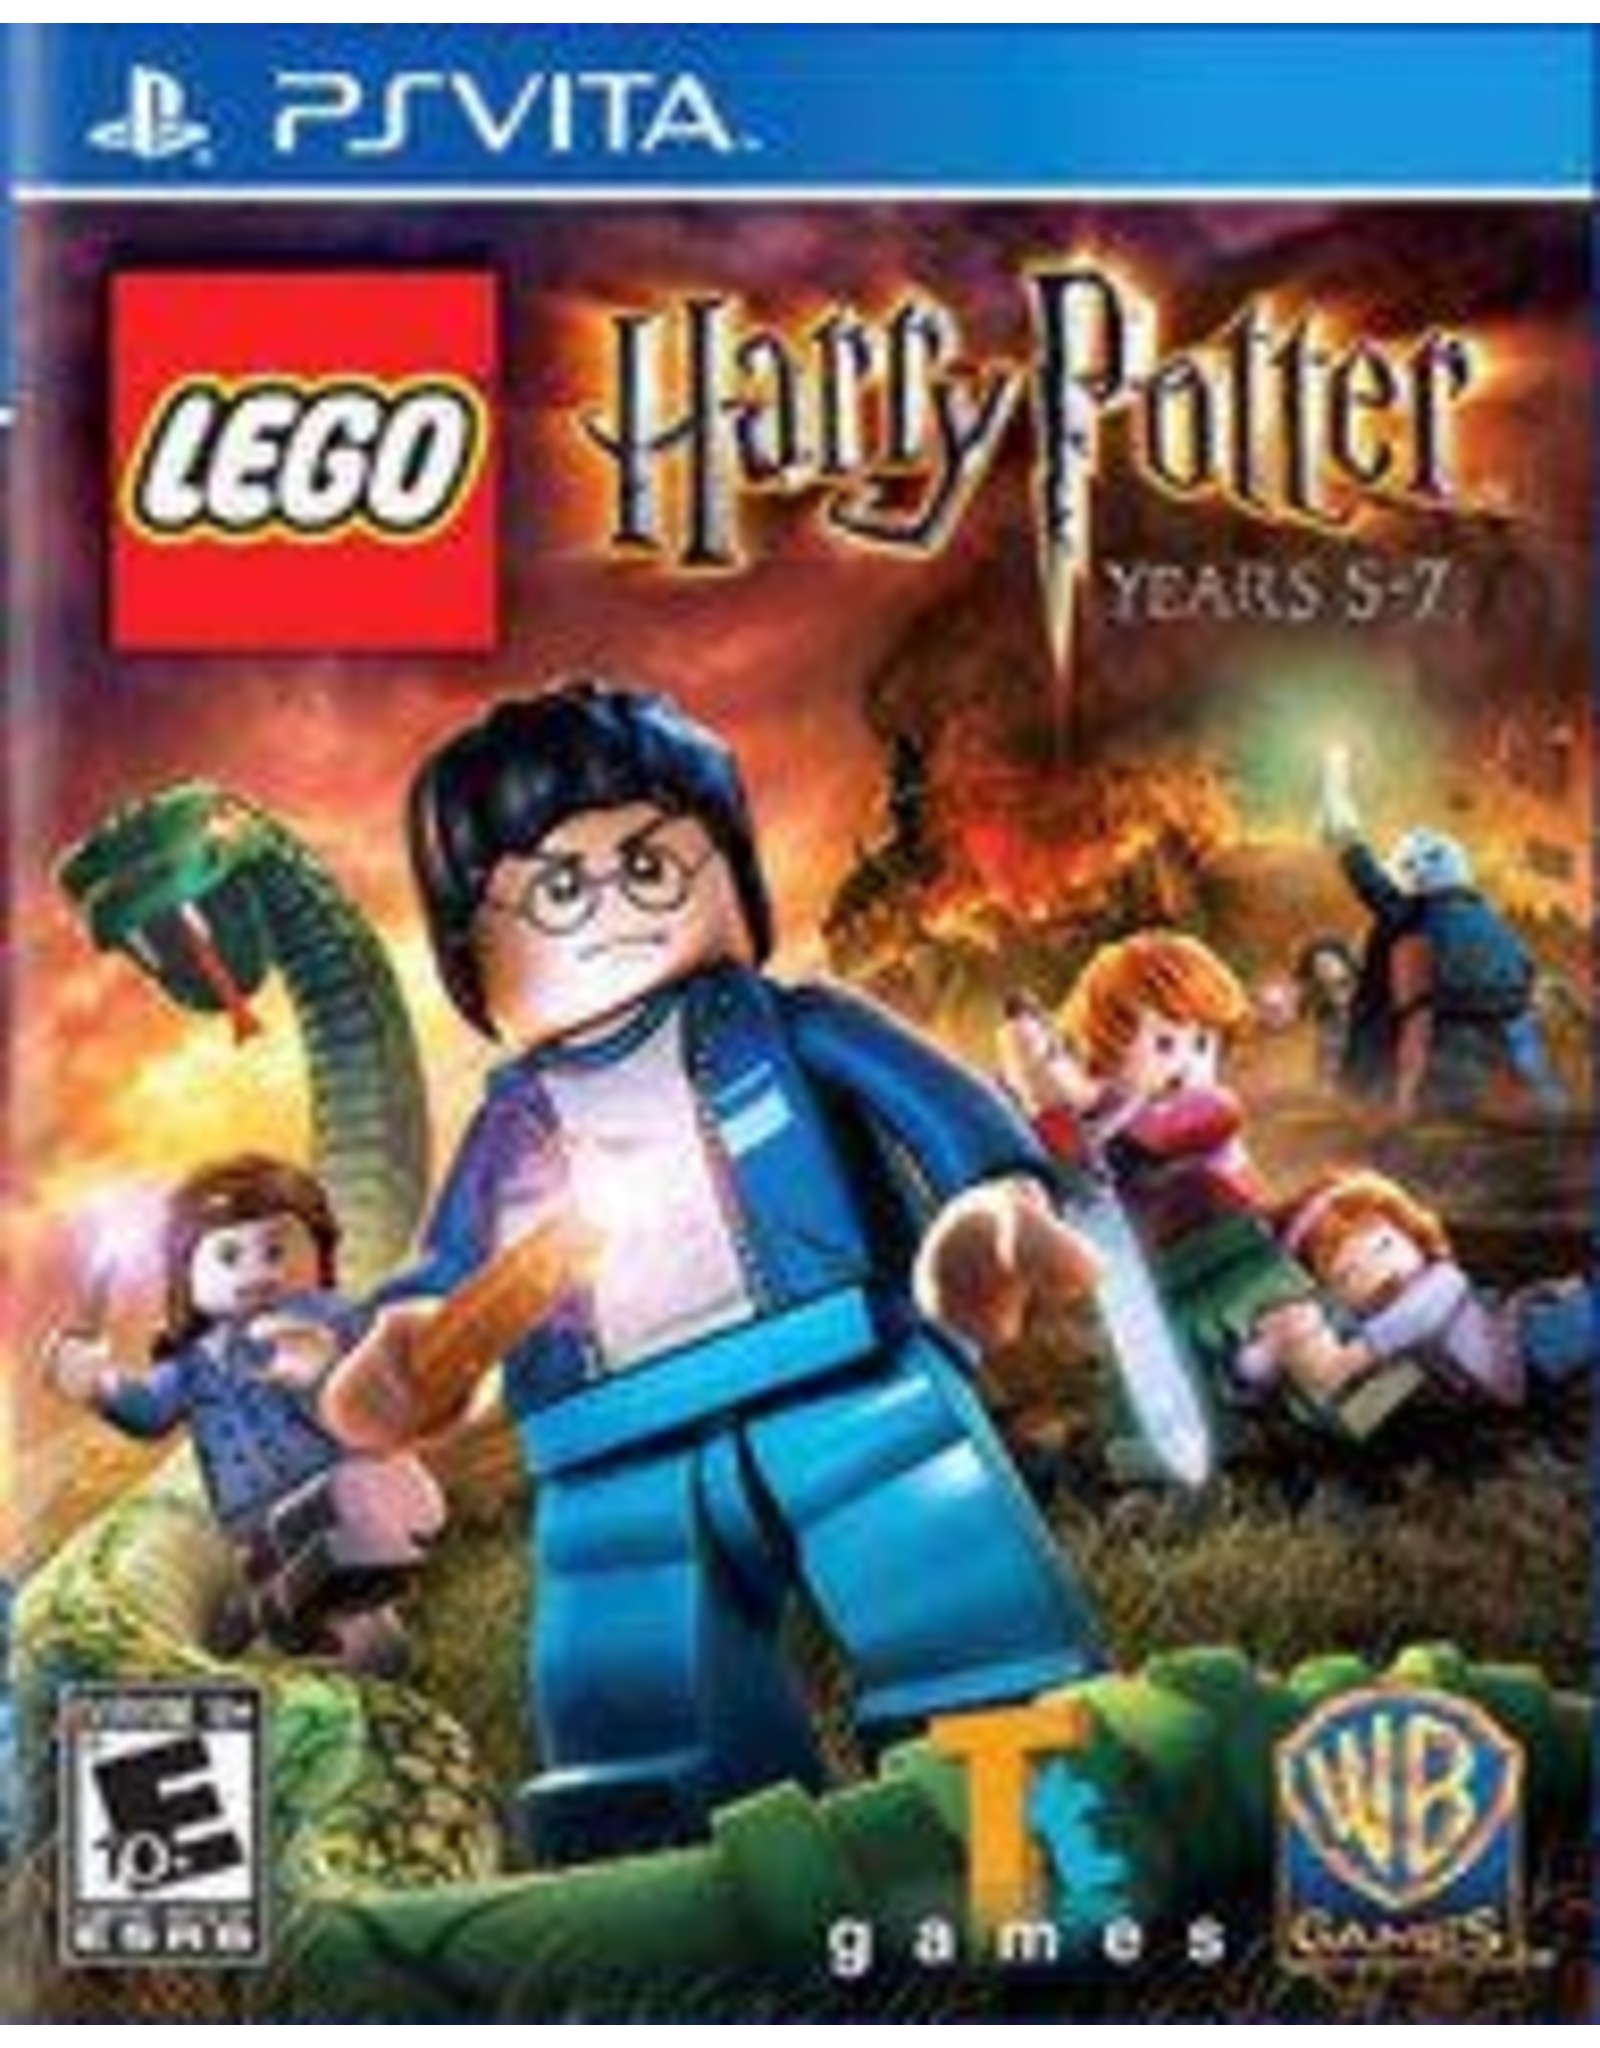 Playstation Vita Lego Harry Potter Years 5-7 (Brand New)